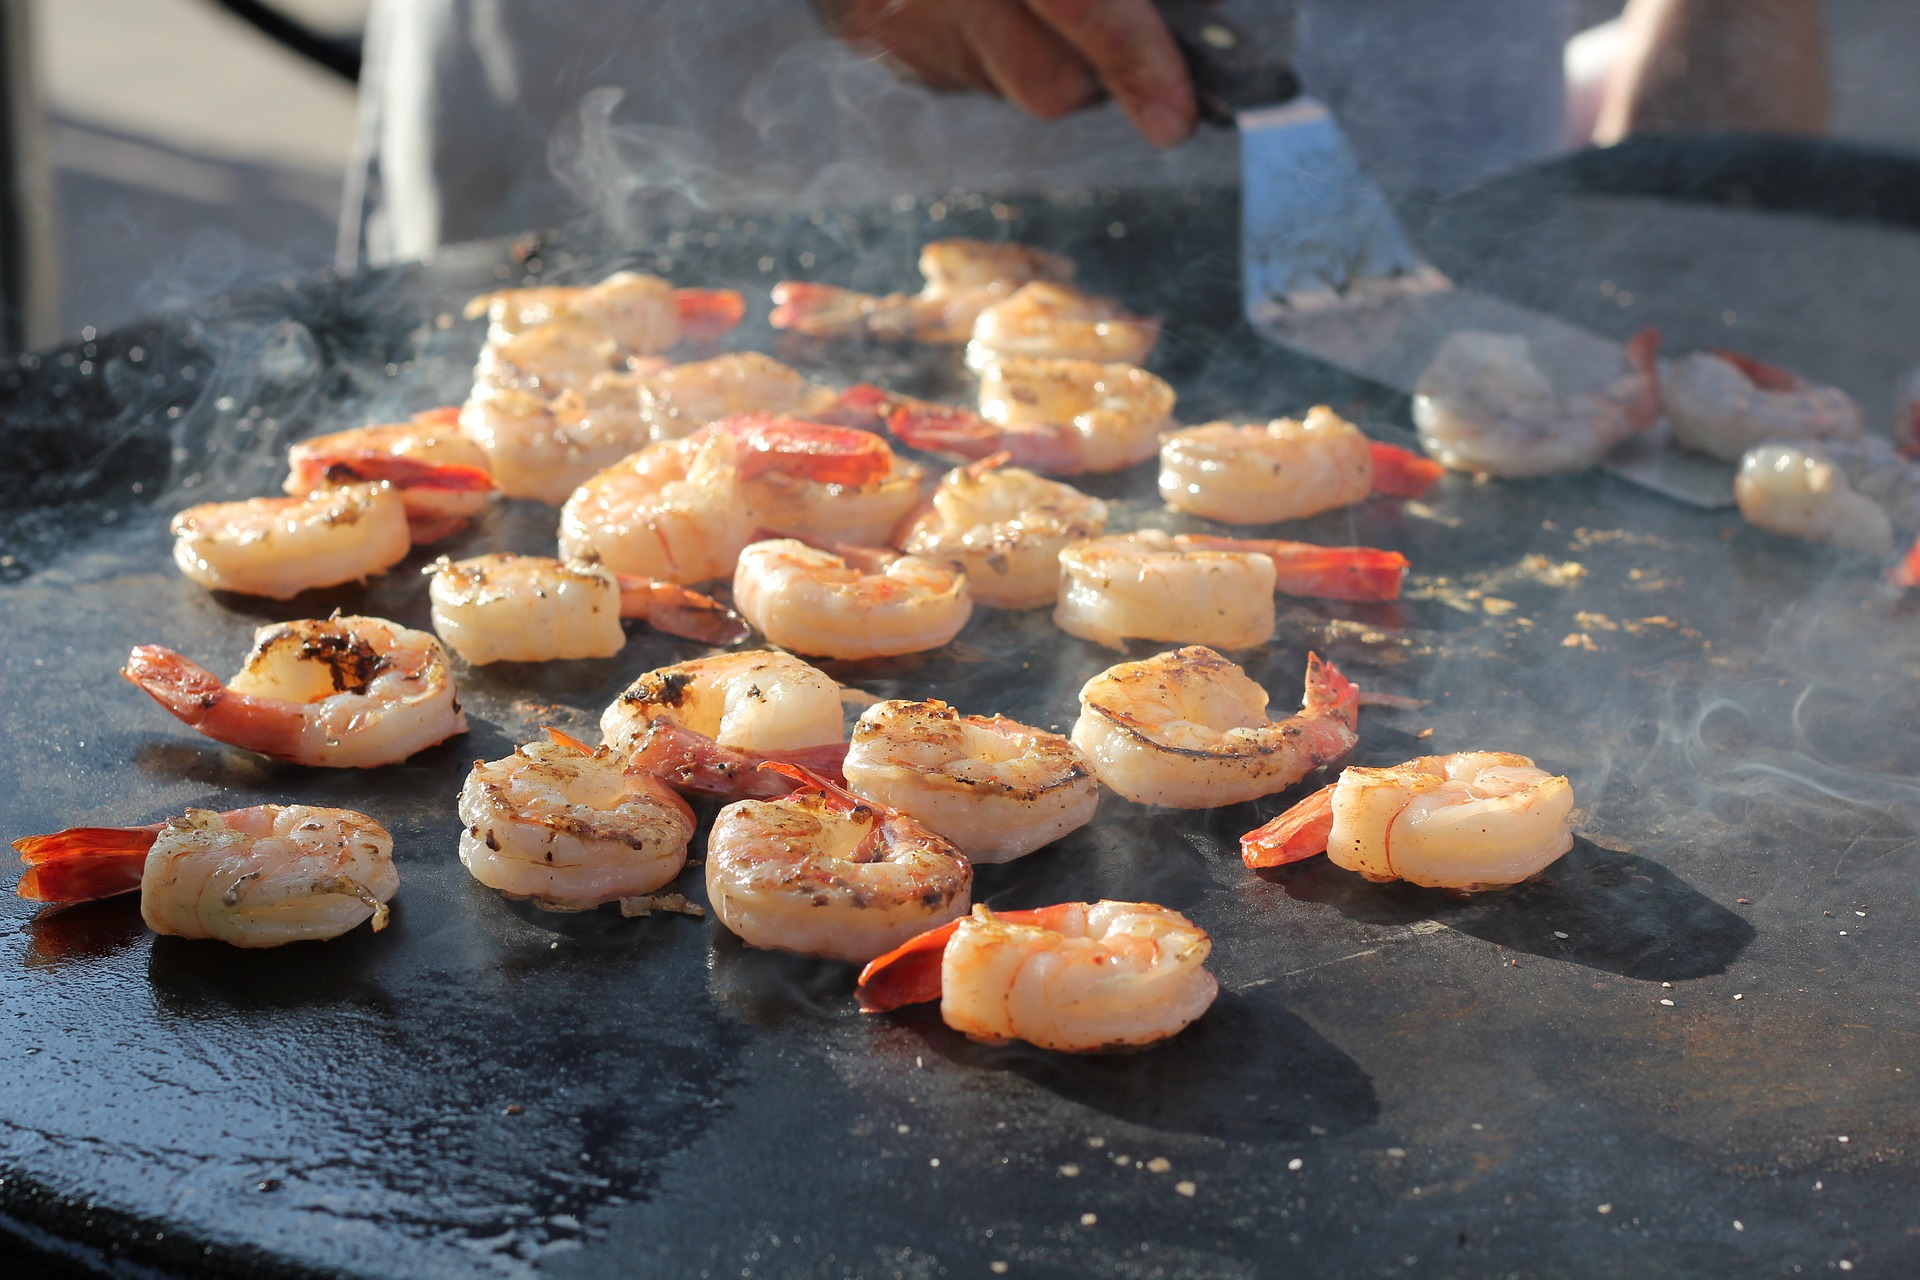 Hilton Head Island Shrimp Festival is Saturday Eat It and Like It